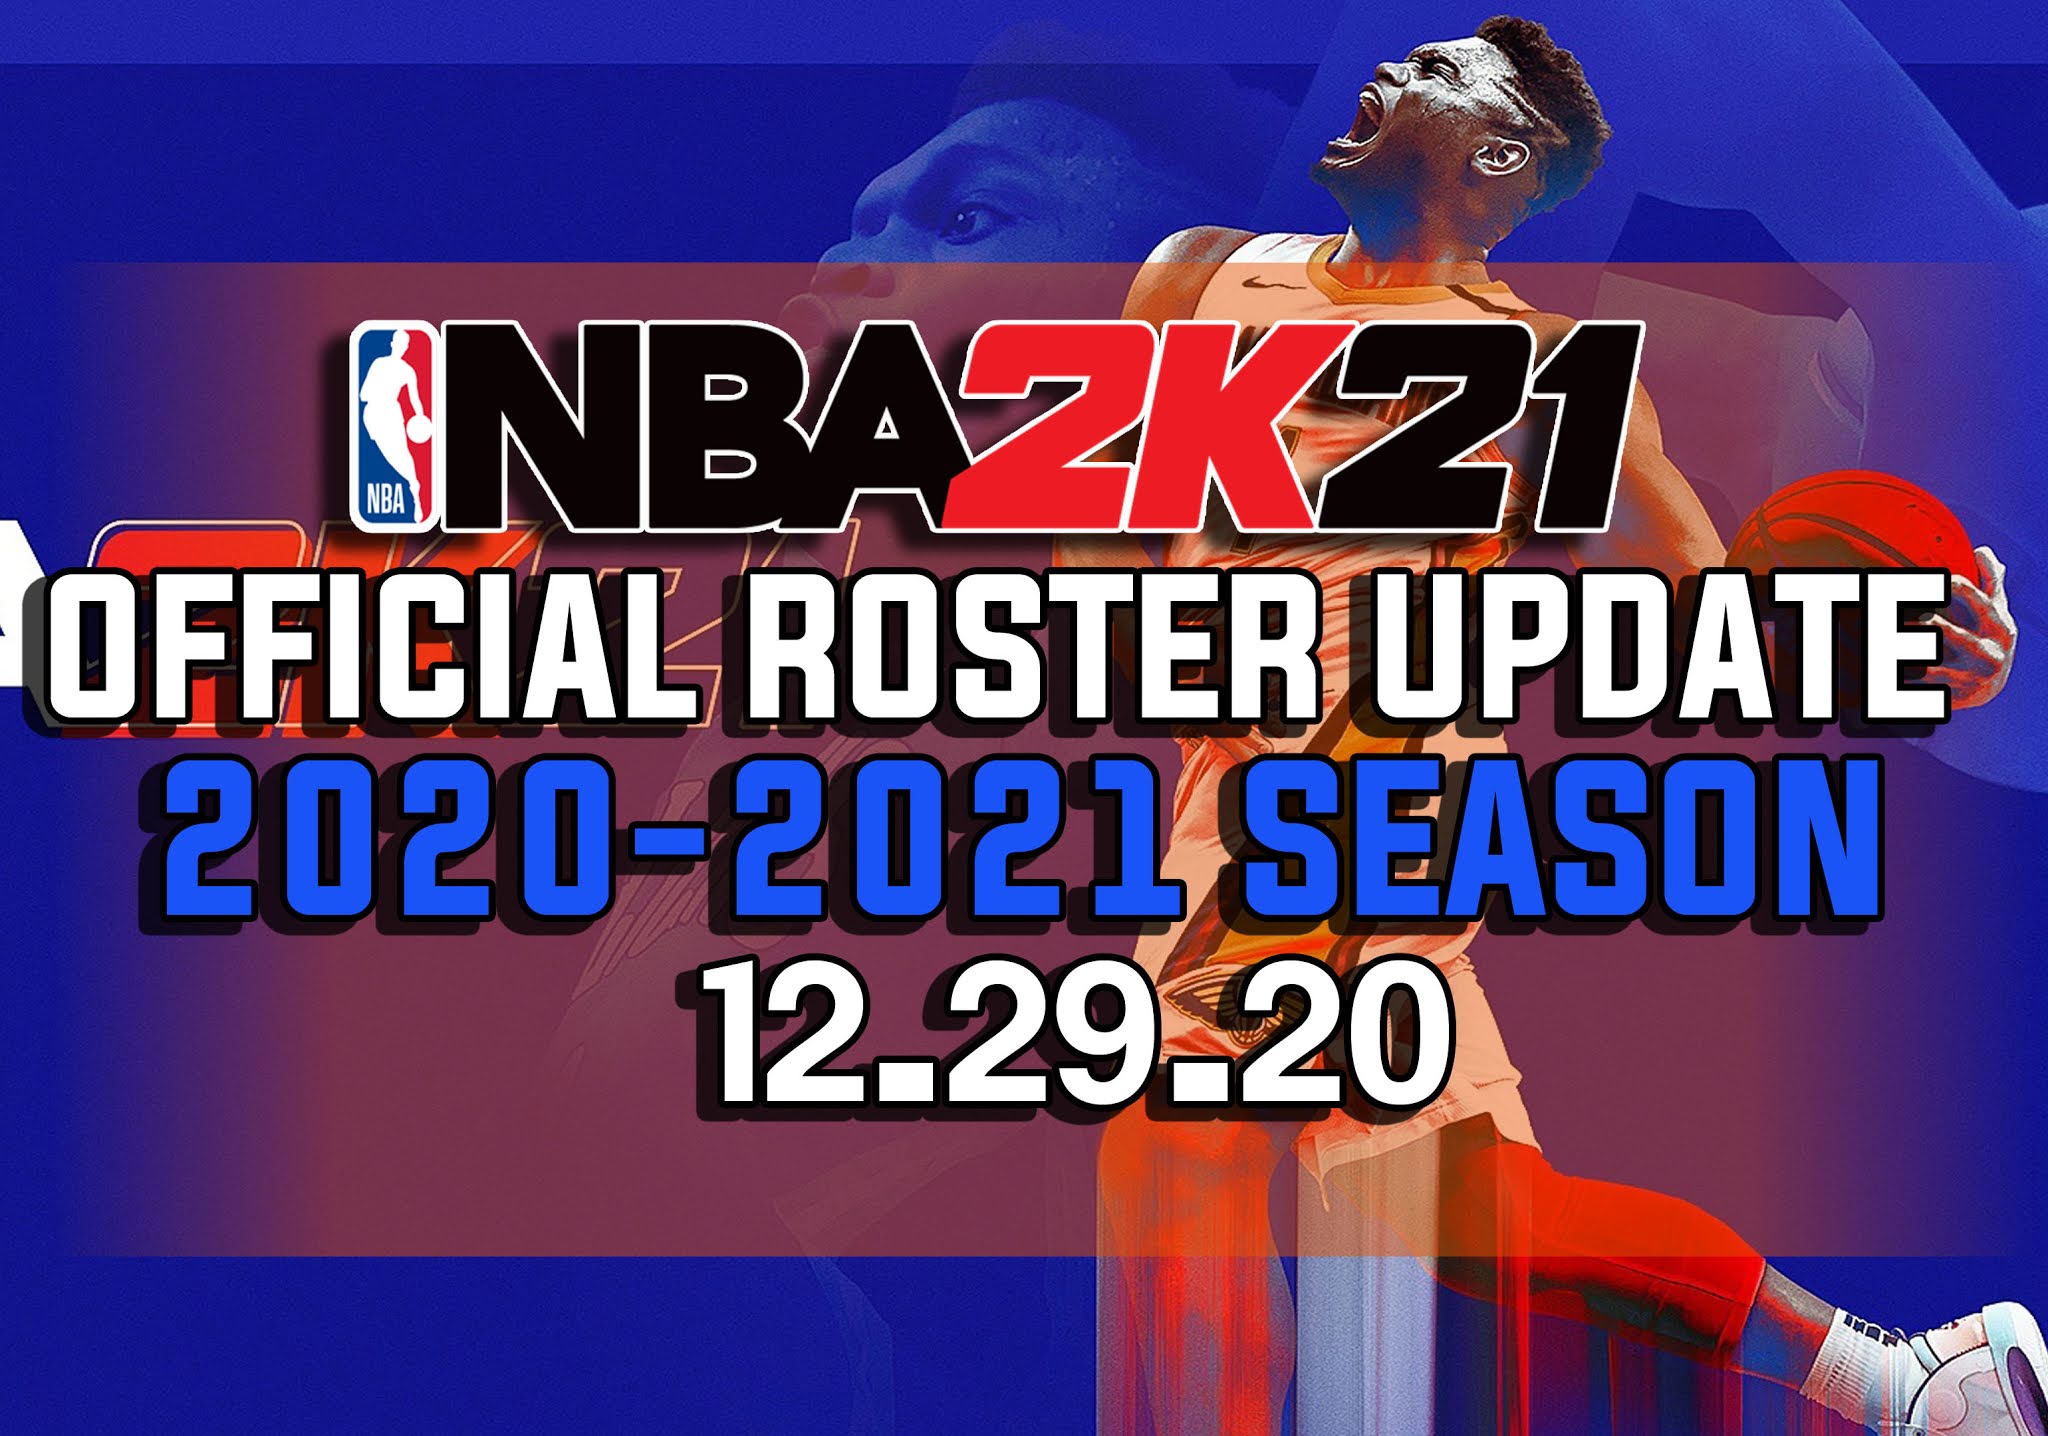 NBA 2K21 OFFICIAL ROSTER UPDATE 12.29.20 OFFICIAL SEASON START + LATEST